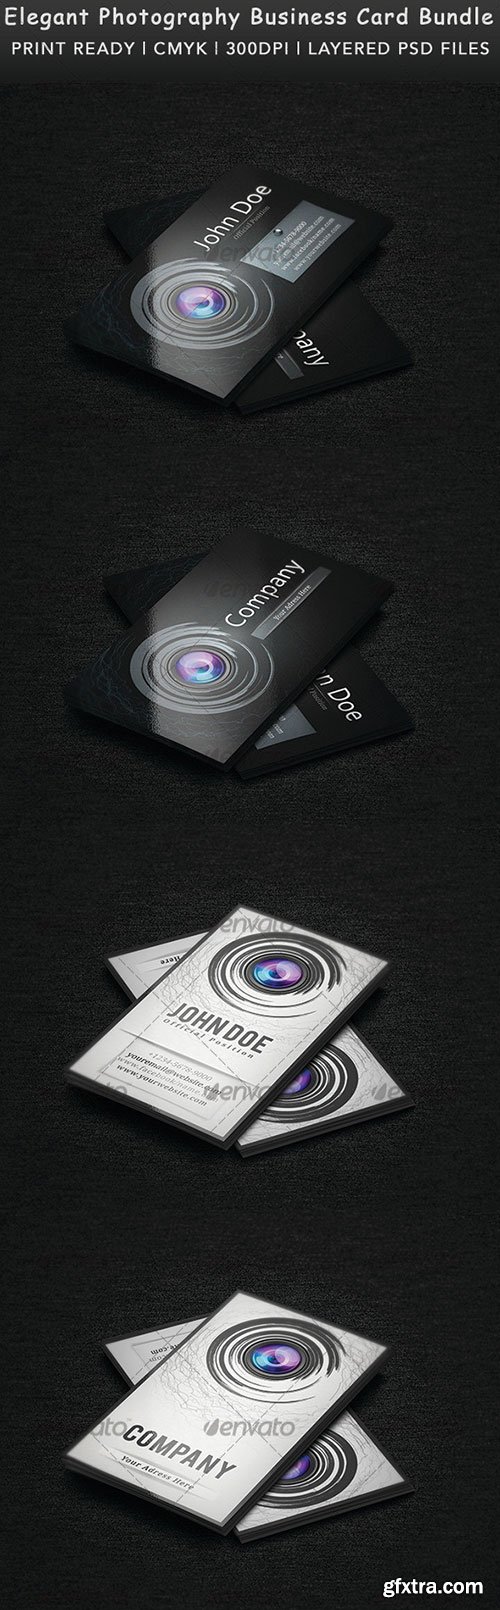 GraphicRiver - Elegant Photography Business Card Bundle